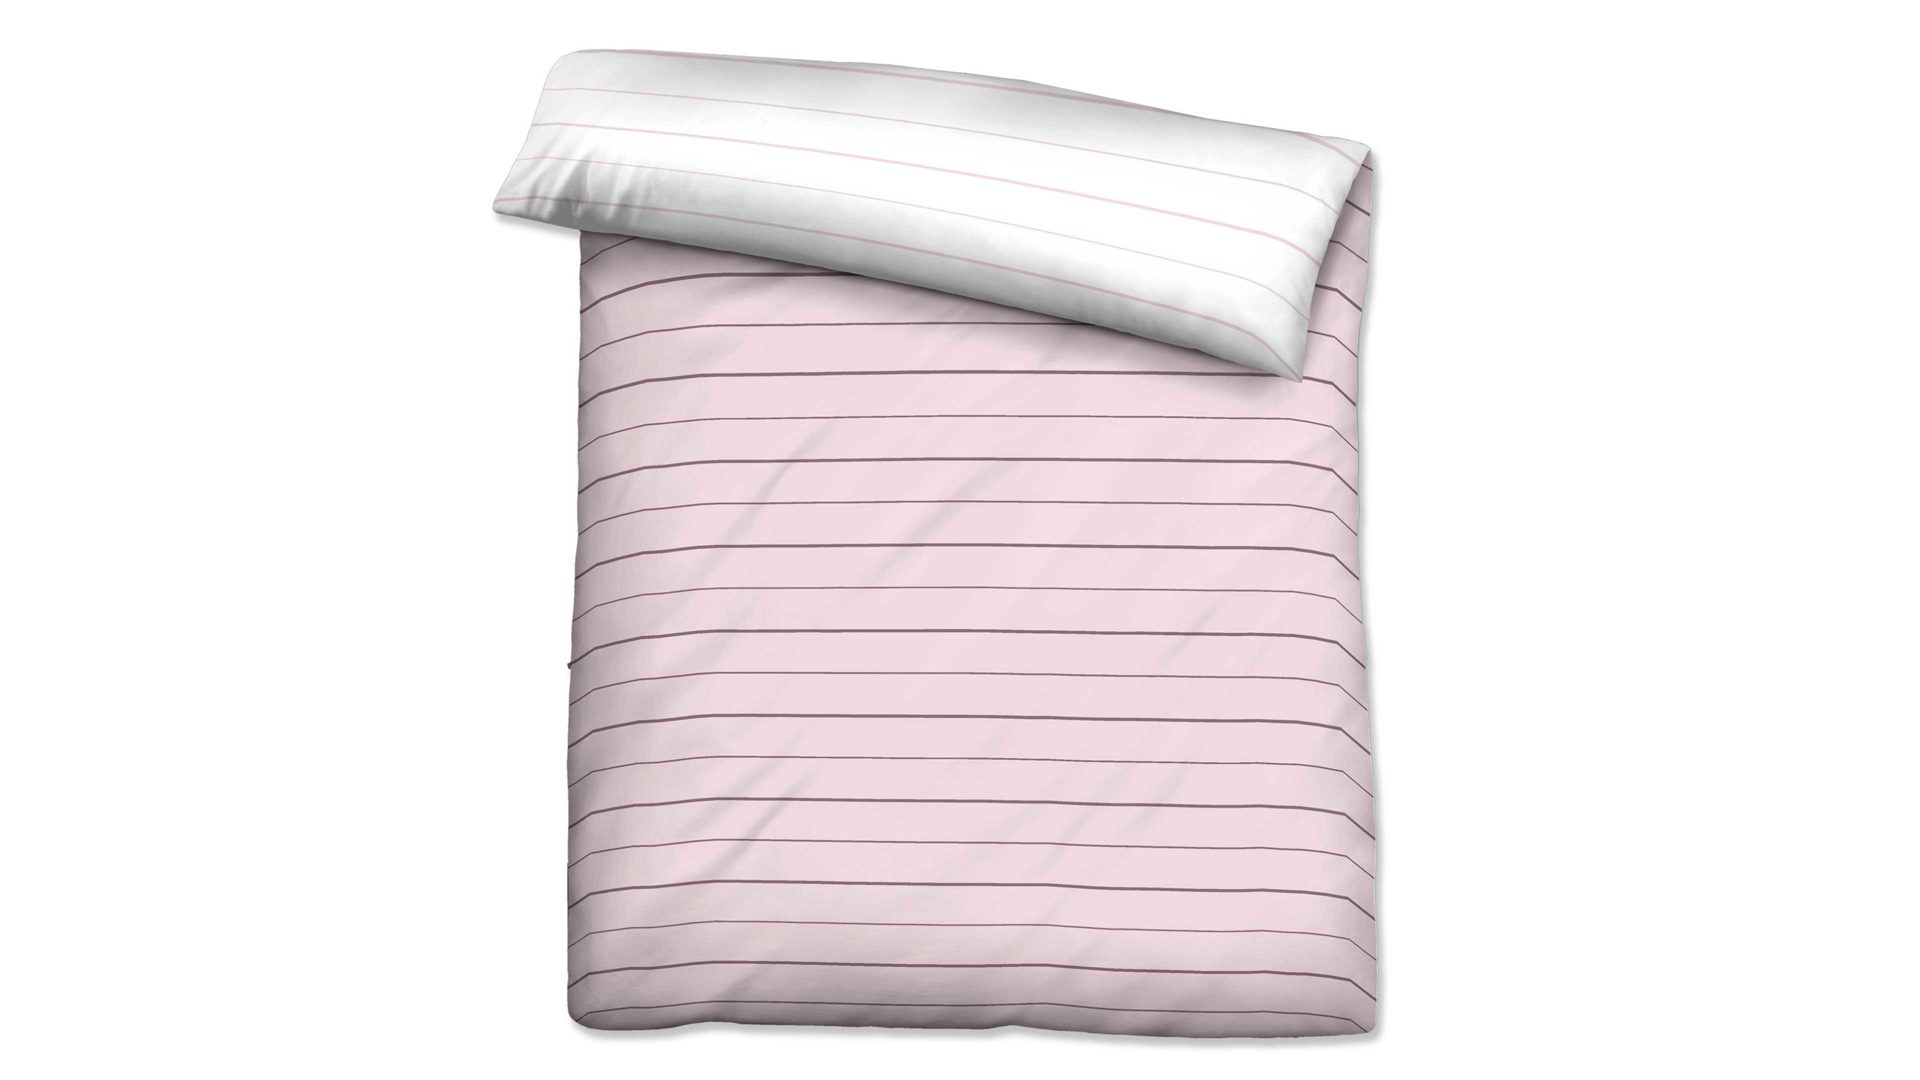 Bettbezug Biberna aus Stoff in Pastellfarben biberna Mako-Satin Bettdeckenbezug Streifen Mix & Match rosefarbene & sturmgraue Streifen – ca. 155 x 200 cm